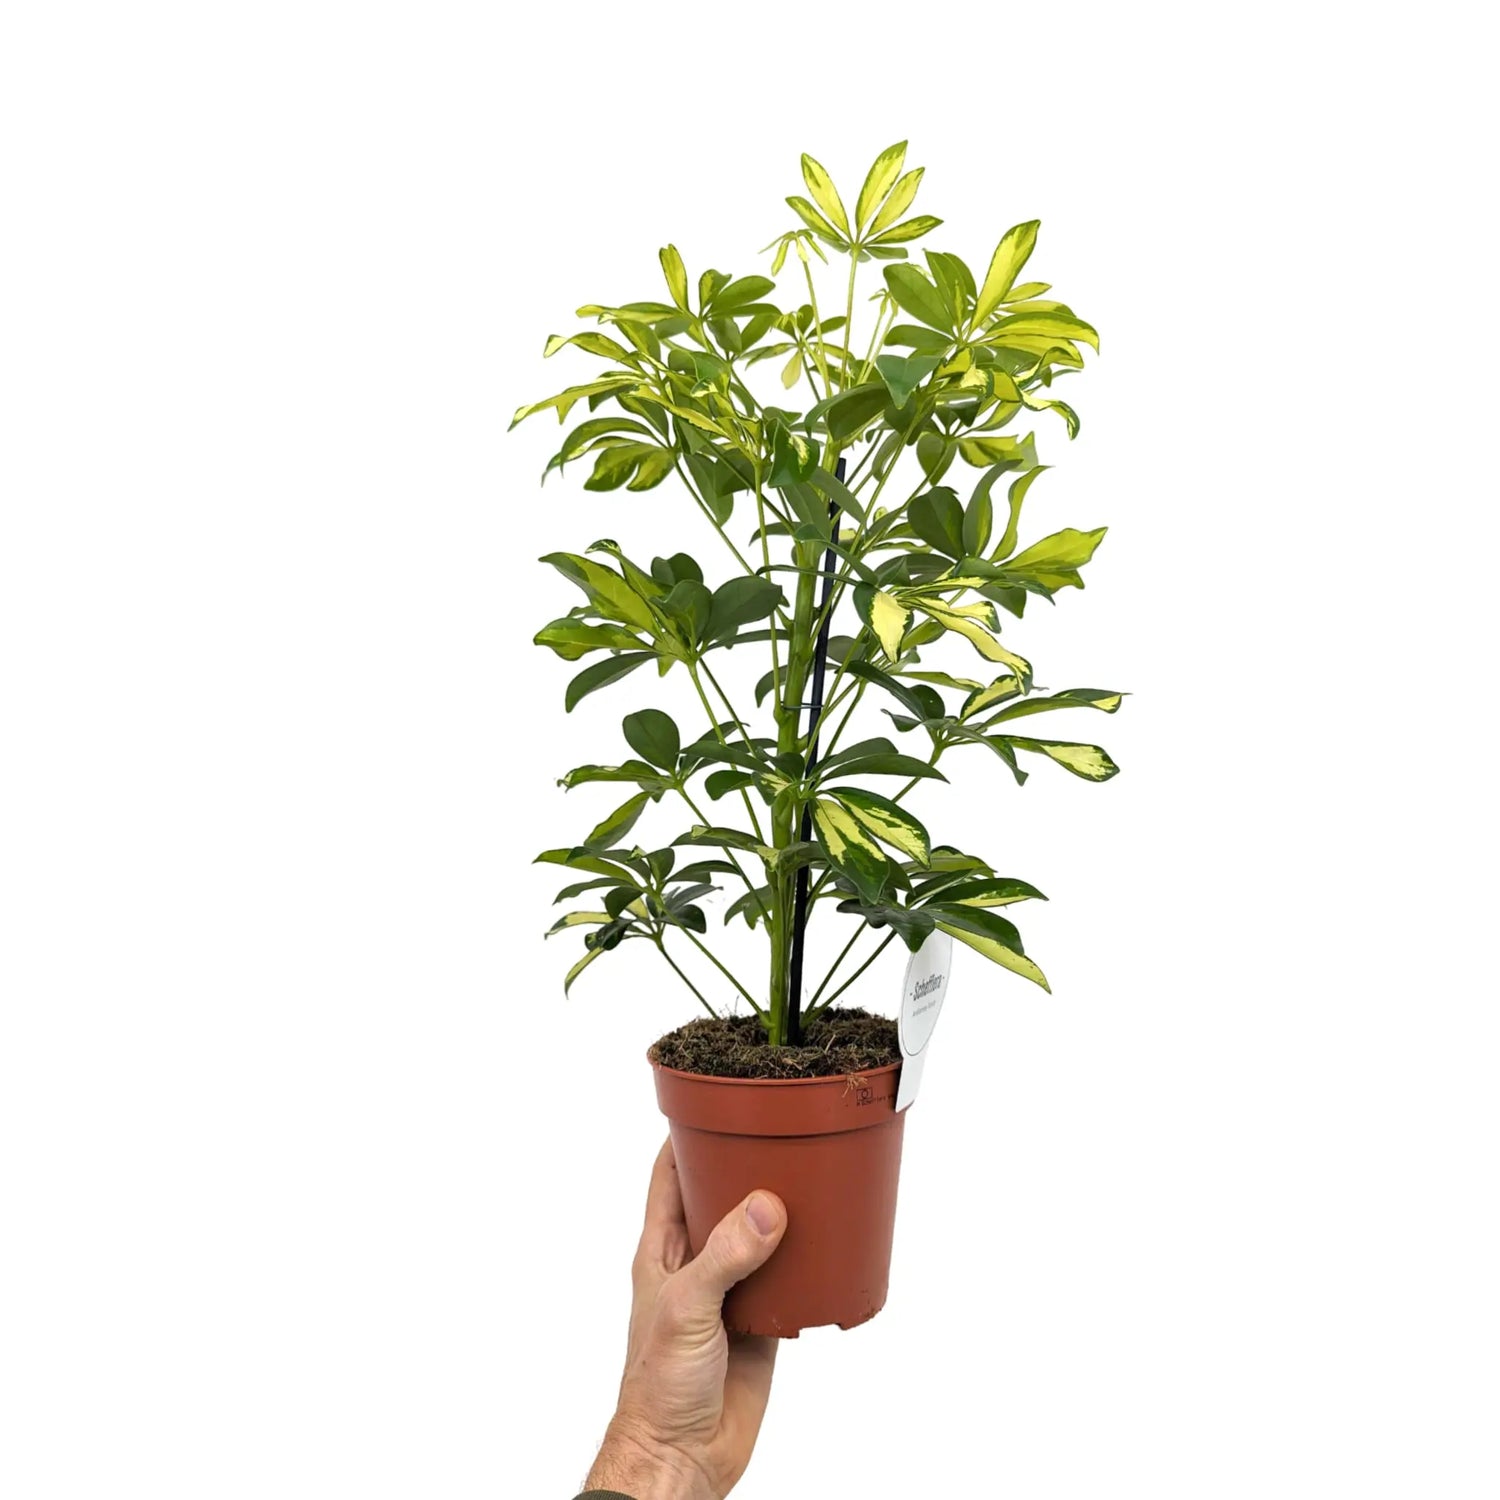 Schefflera arboricola Varieagated- Umbrella Tree Leaf Culture